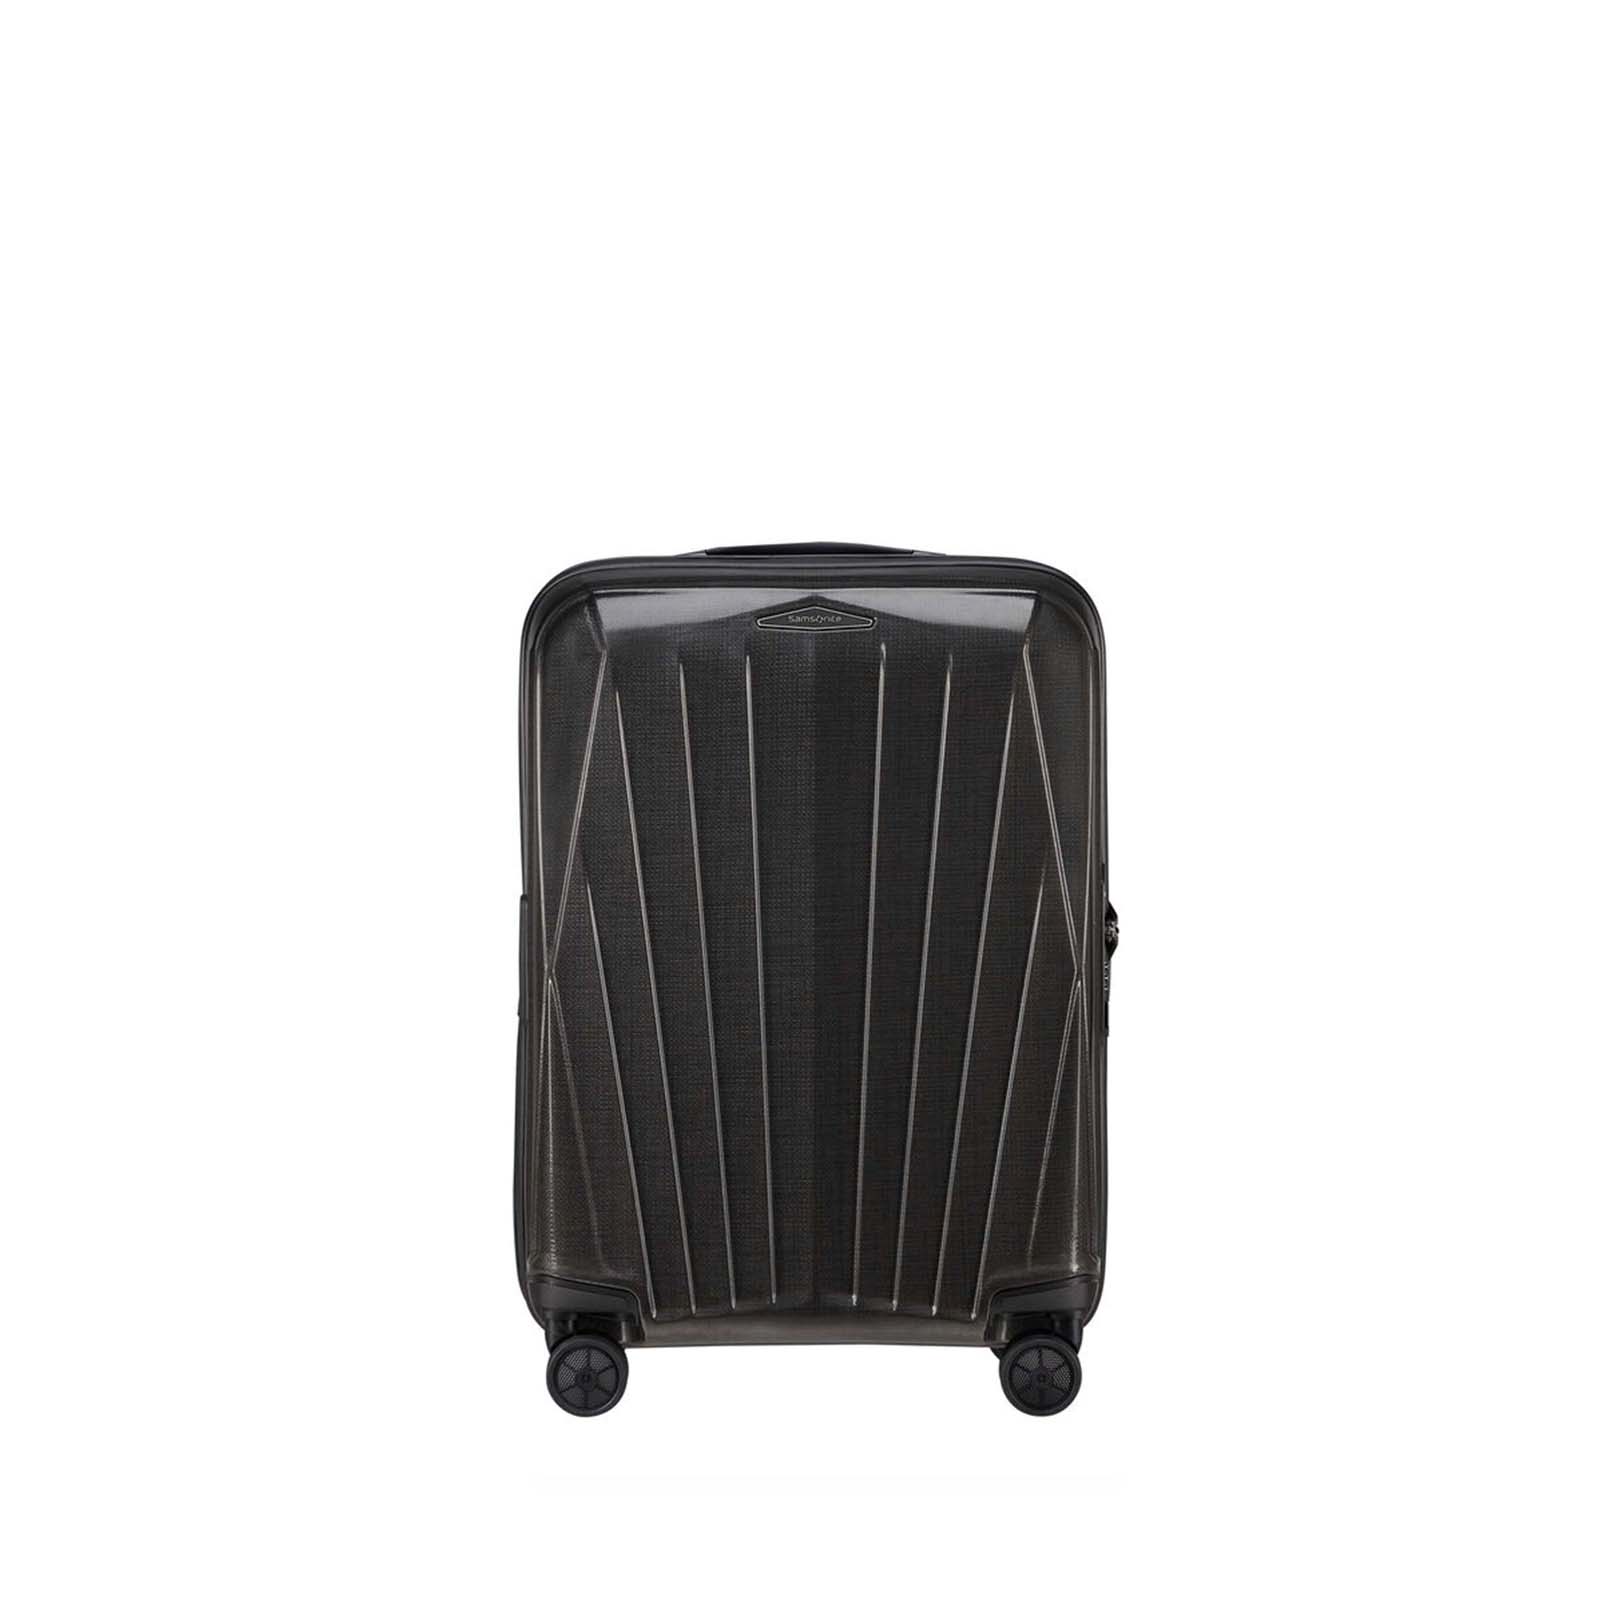 Samsonite-Major-Lite-55cm-Suitcase-Black-Front